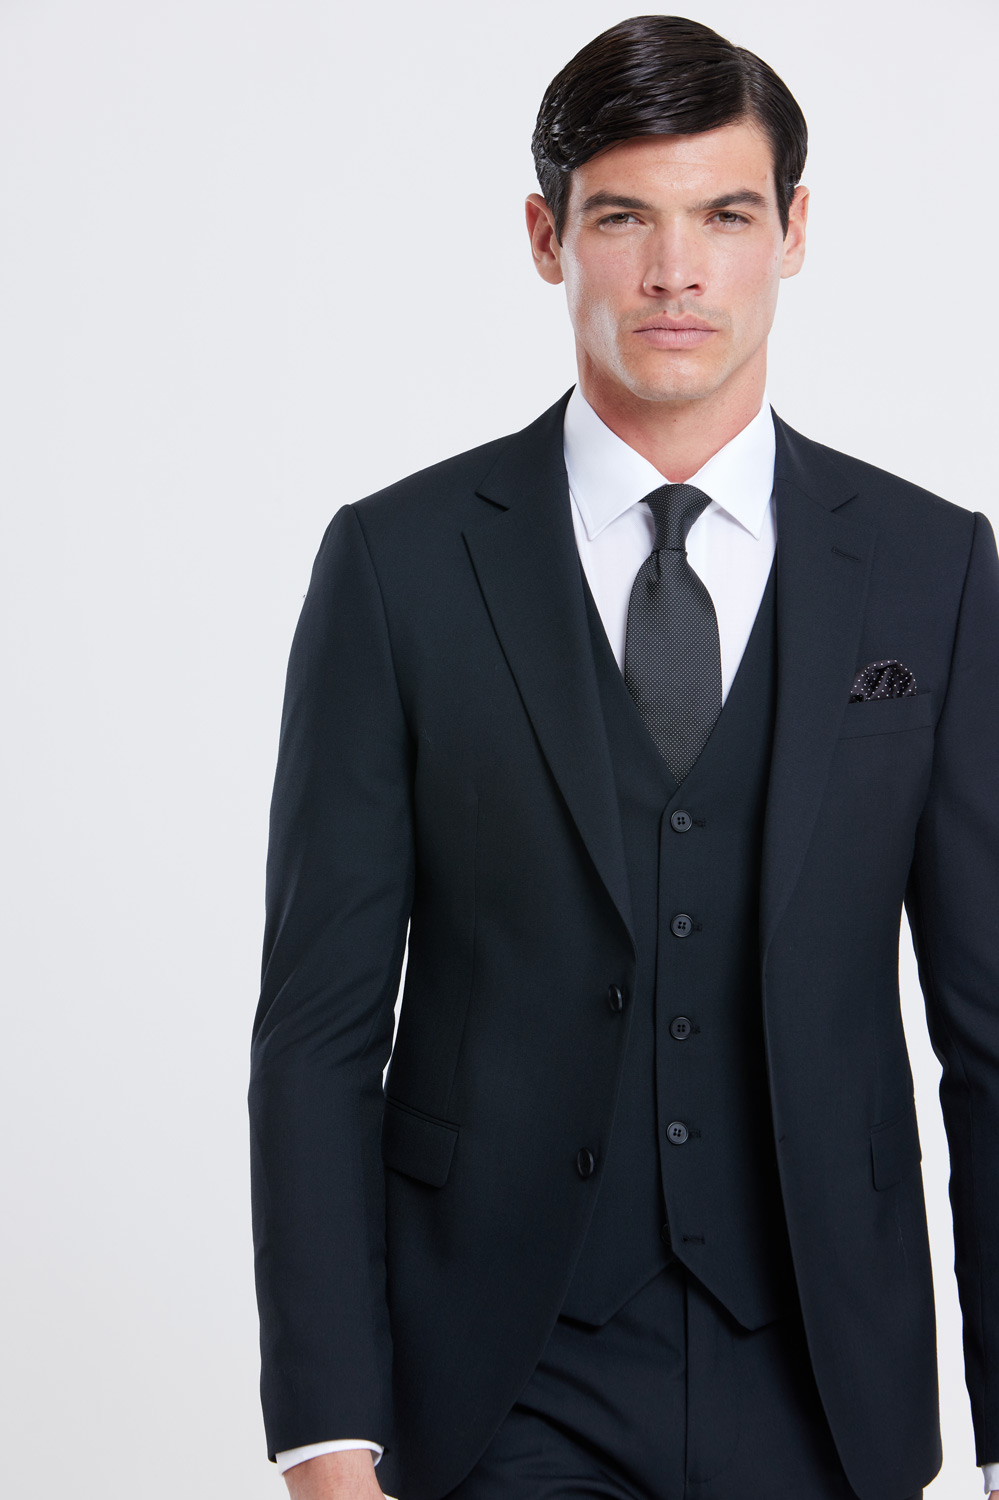 James Black 3 Piece Wedding Suit - Tom Murphy's Formal and Menswear